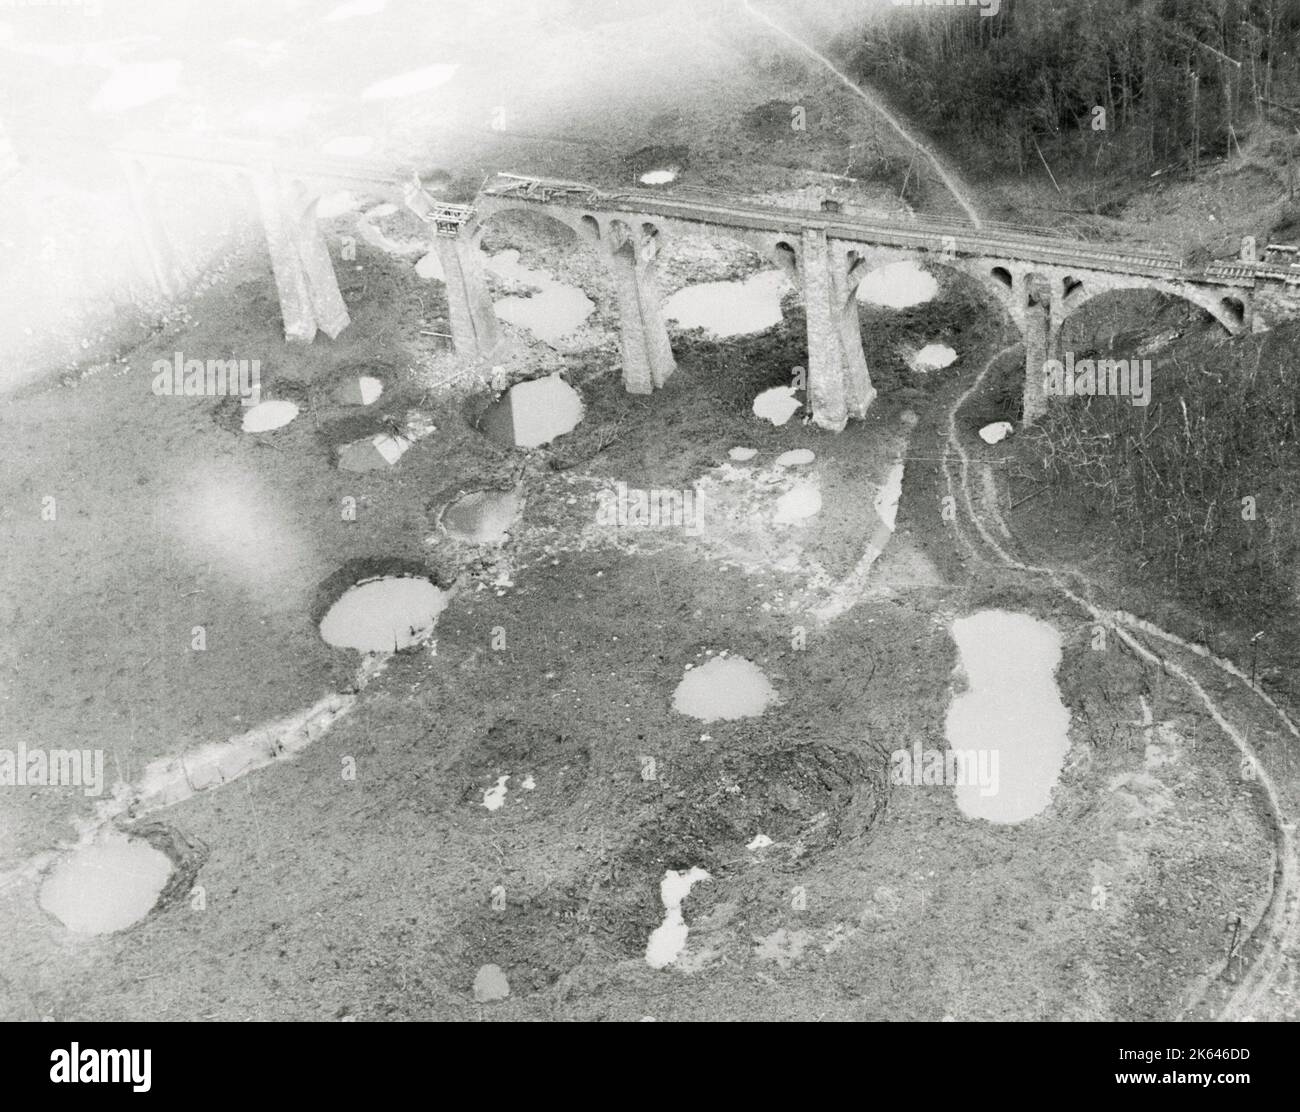 Vintage World War II photograph - official US military photo: bombed railway bridge, Netze, Germany, 9th Airforce bombardment. Stock Photo